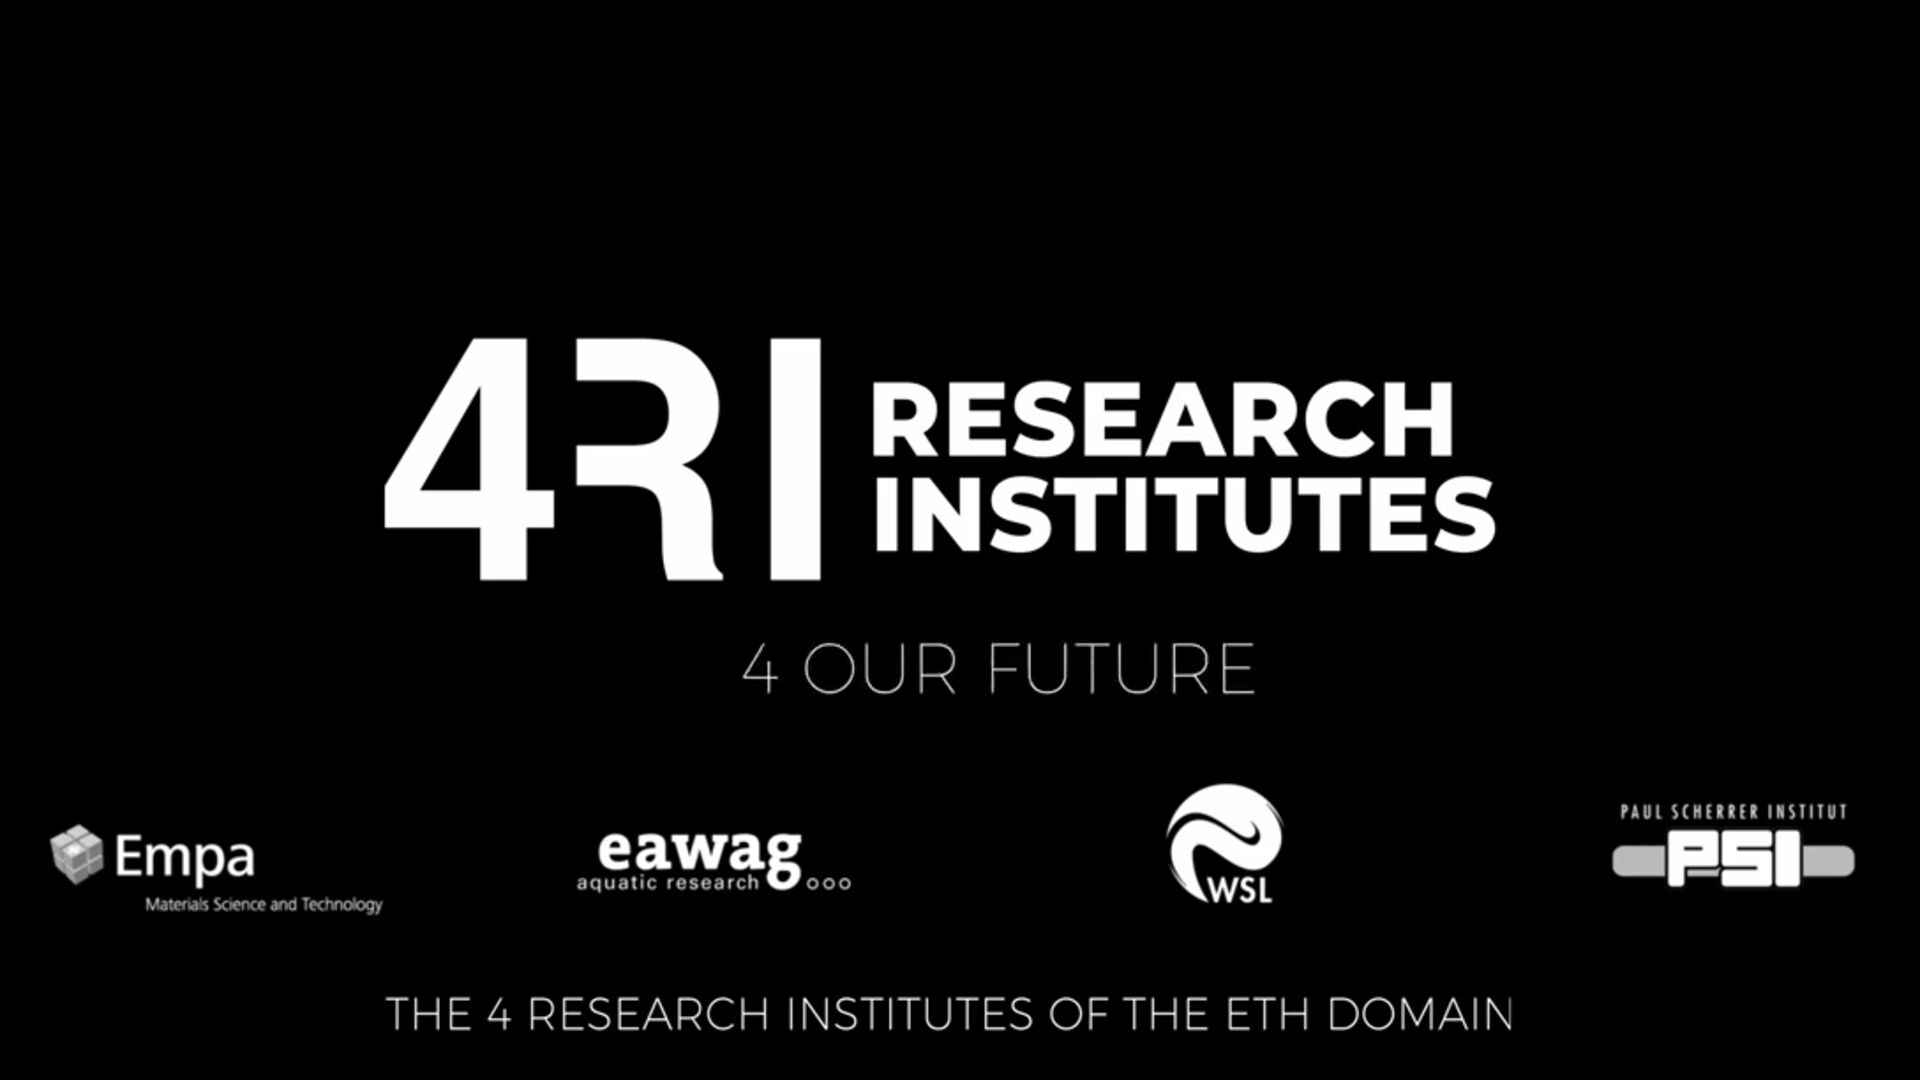 Centros de investigación suizos: EMPA, EAWAG, WSL y PSI